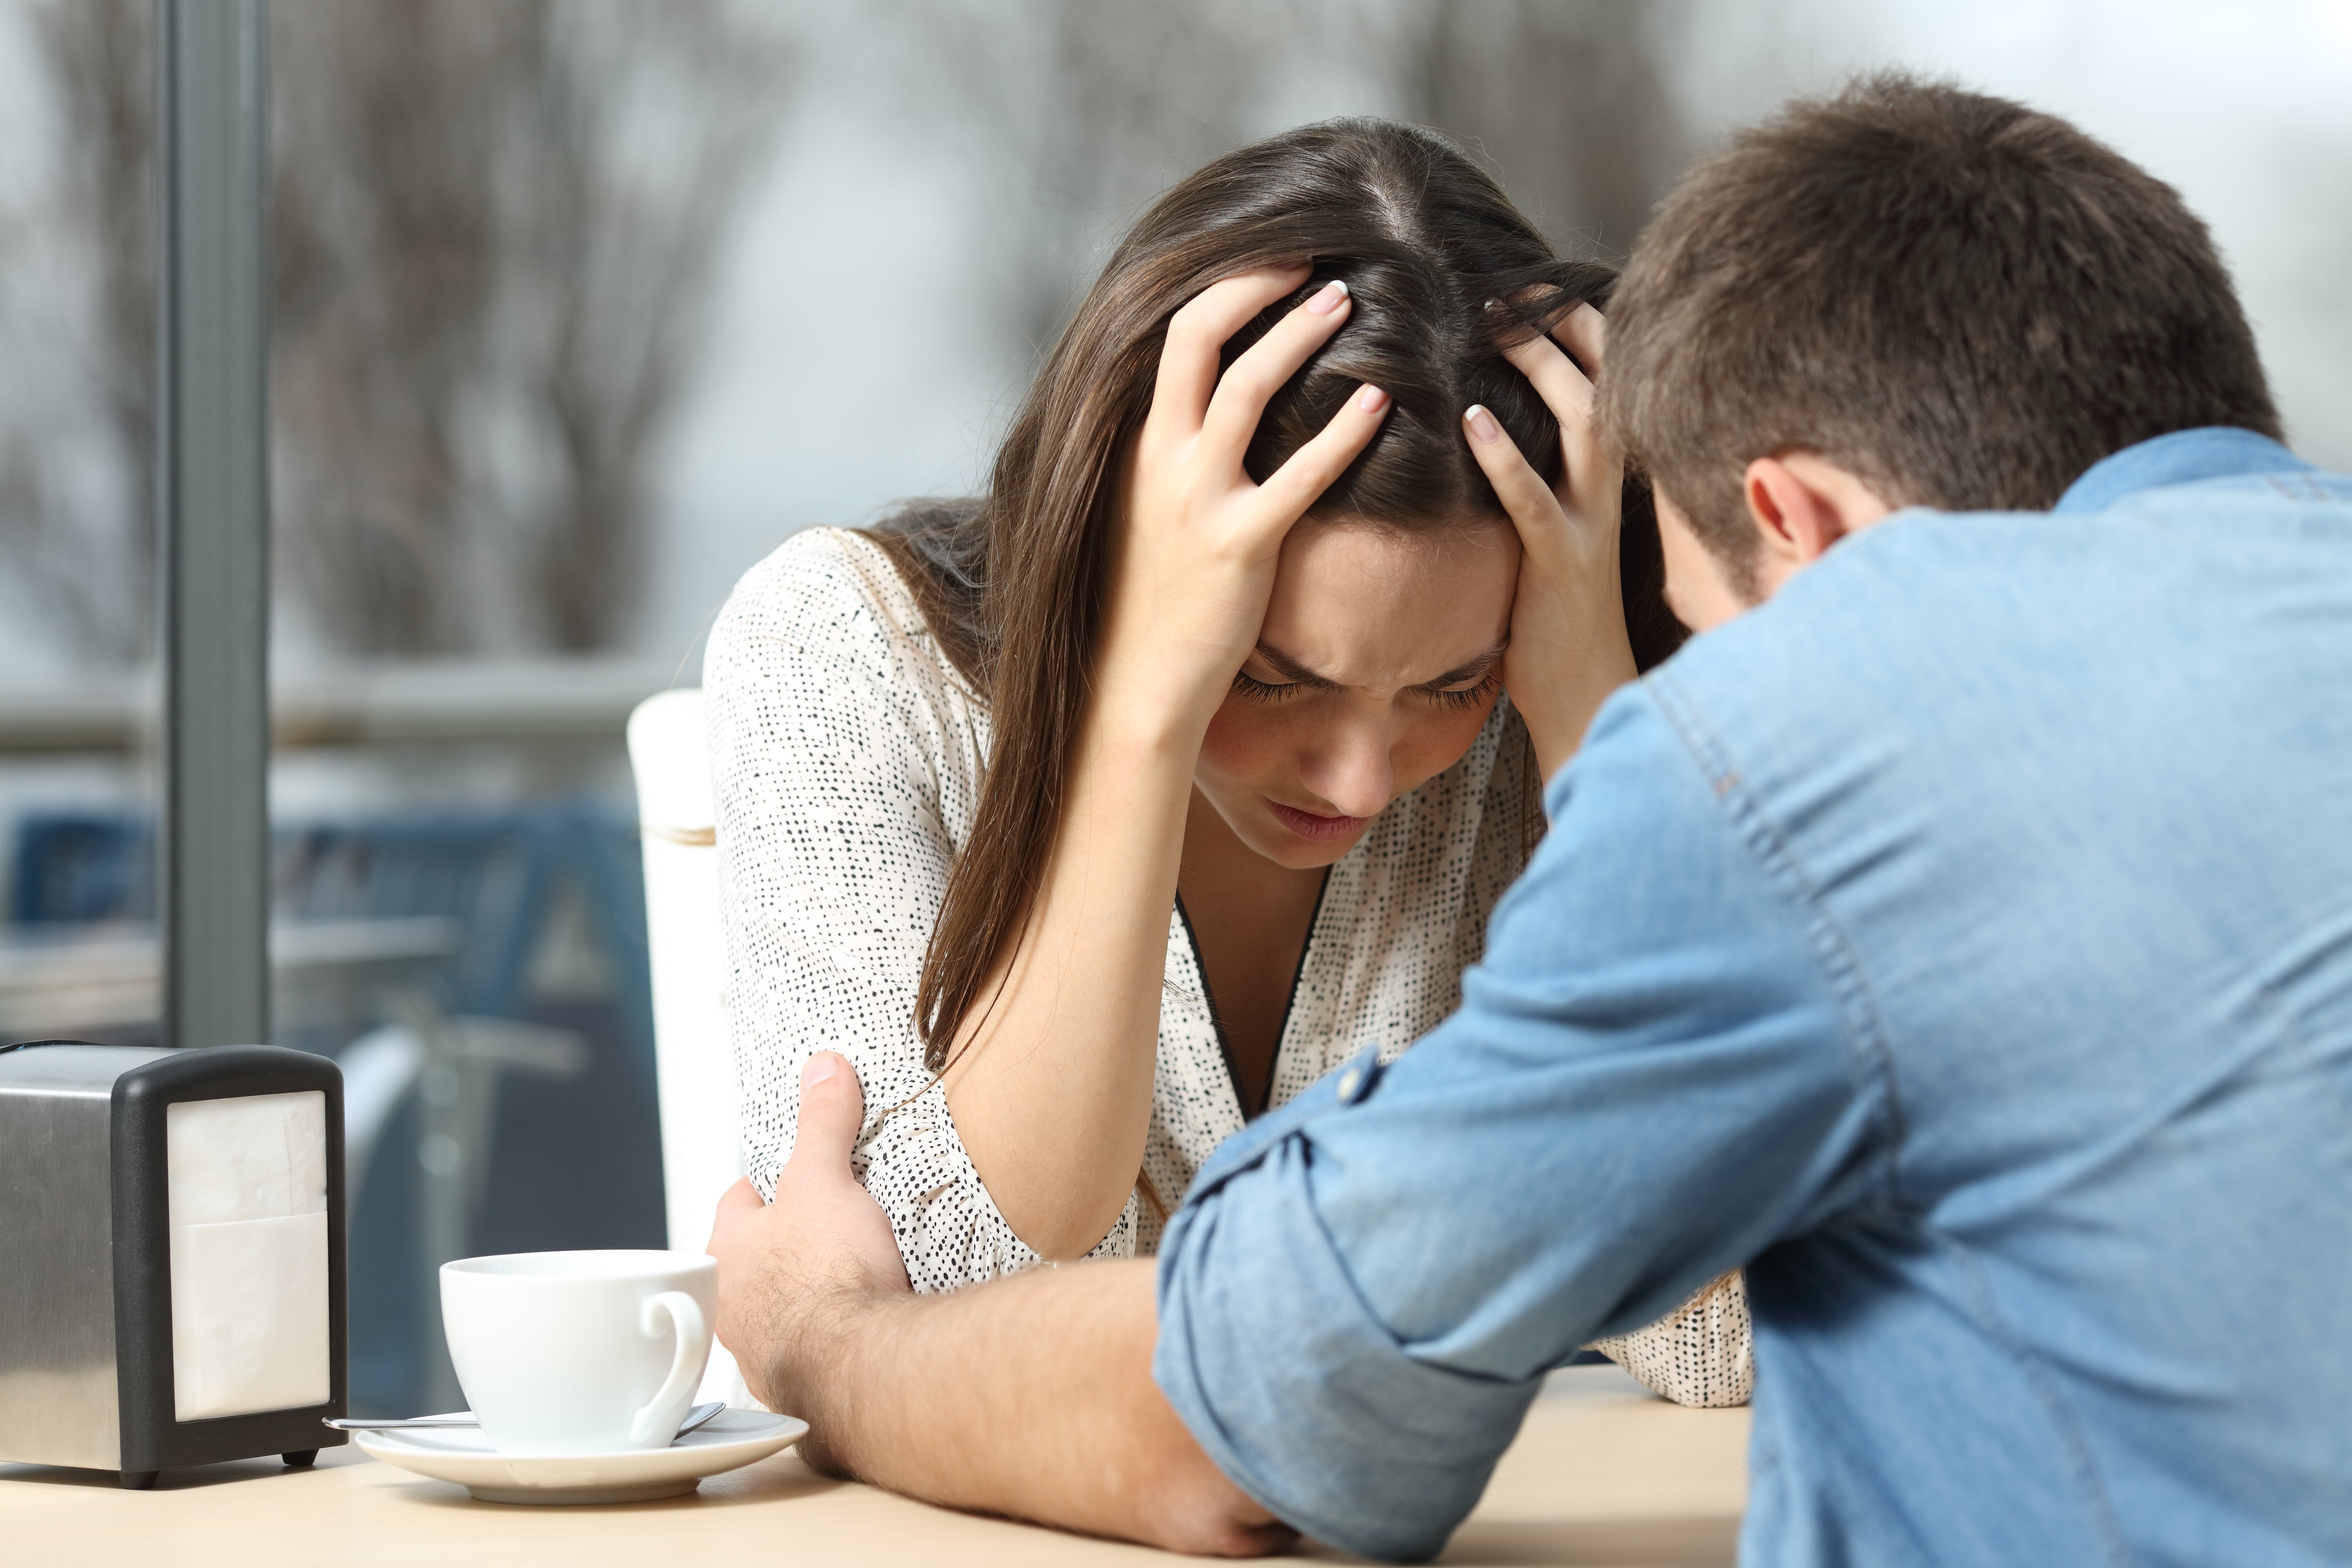 Man consoling upset woman.|Source: Shutterstock